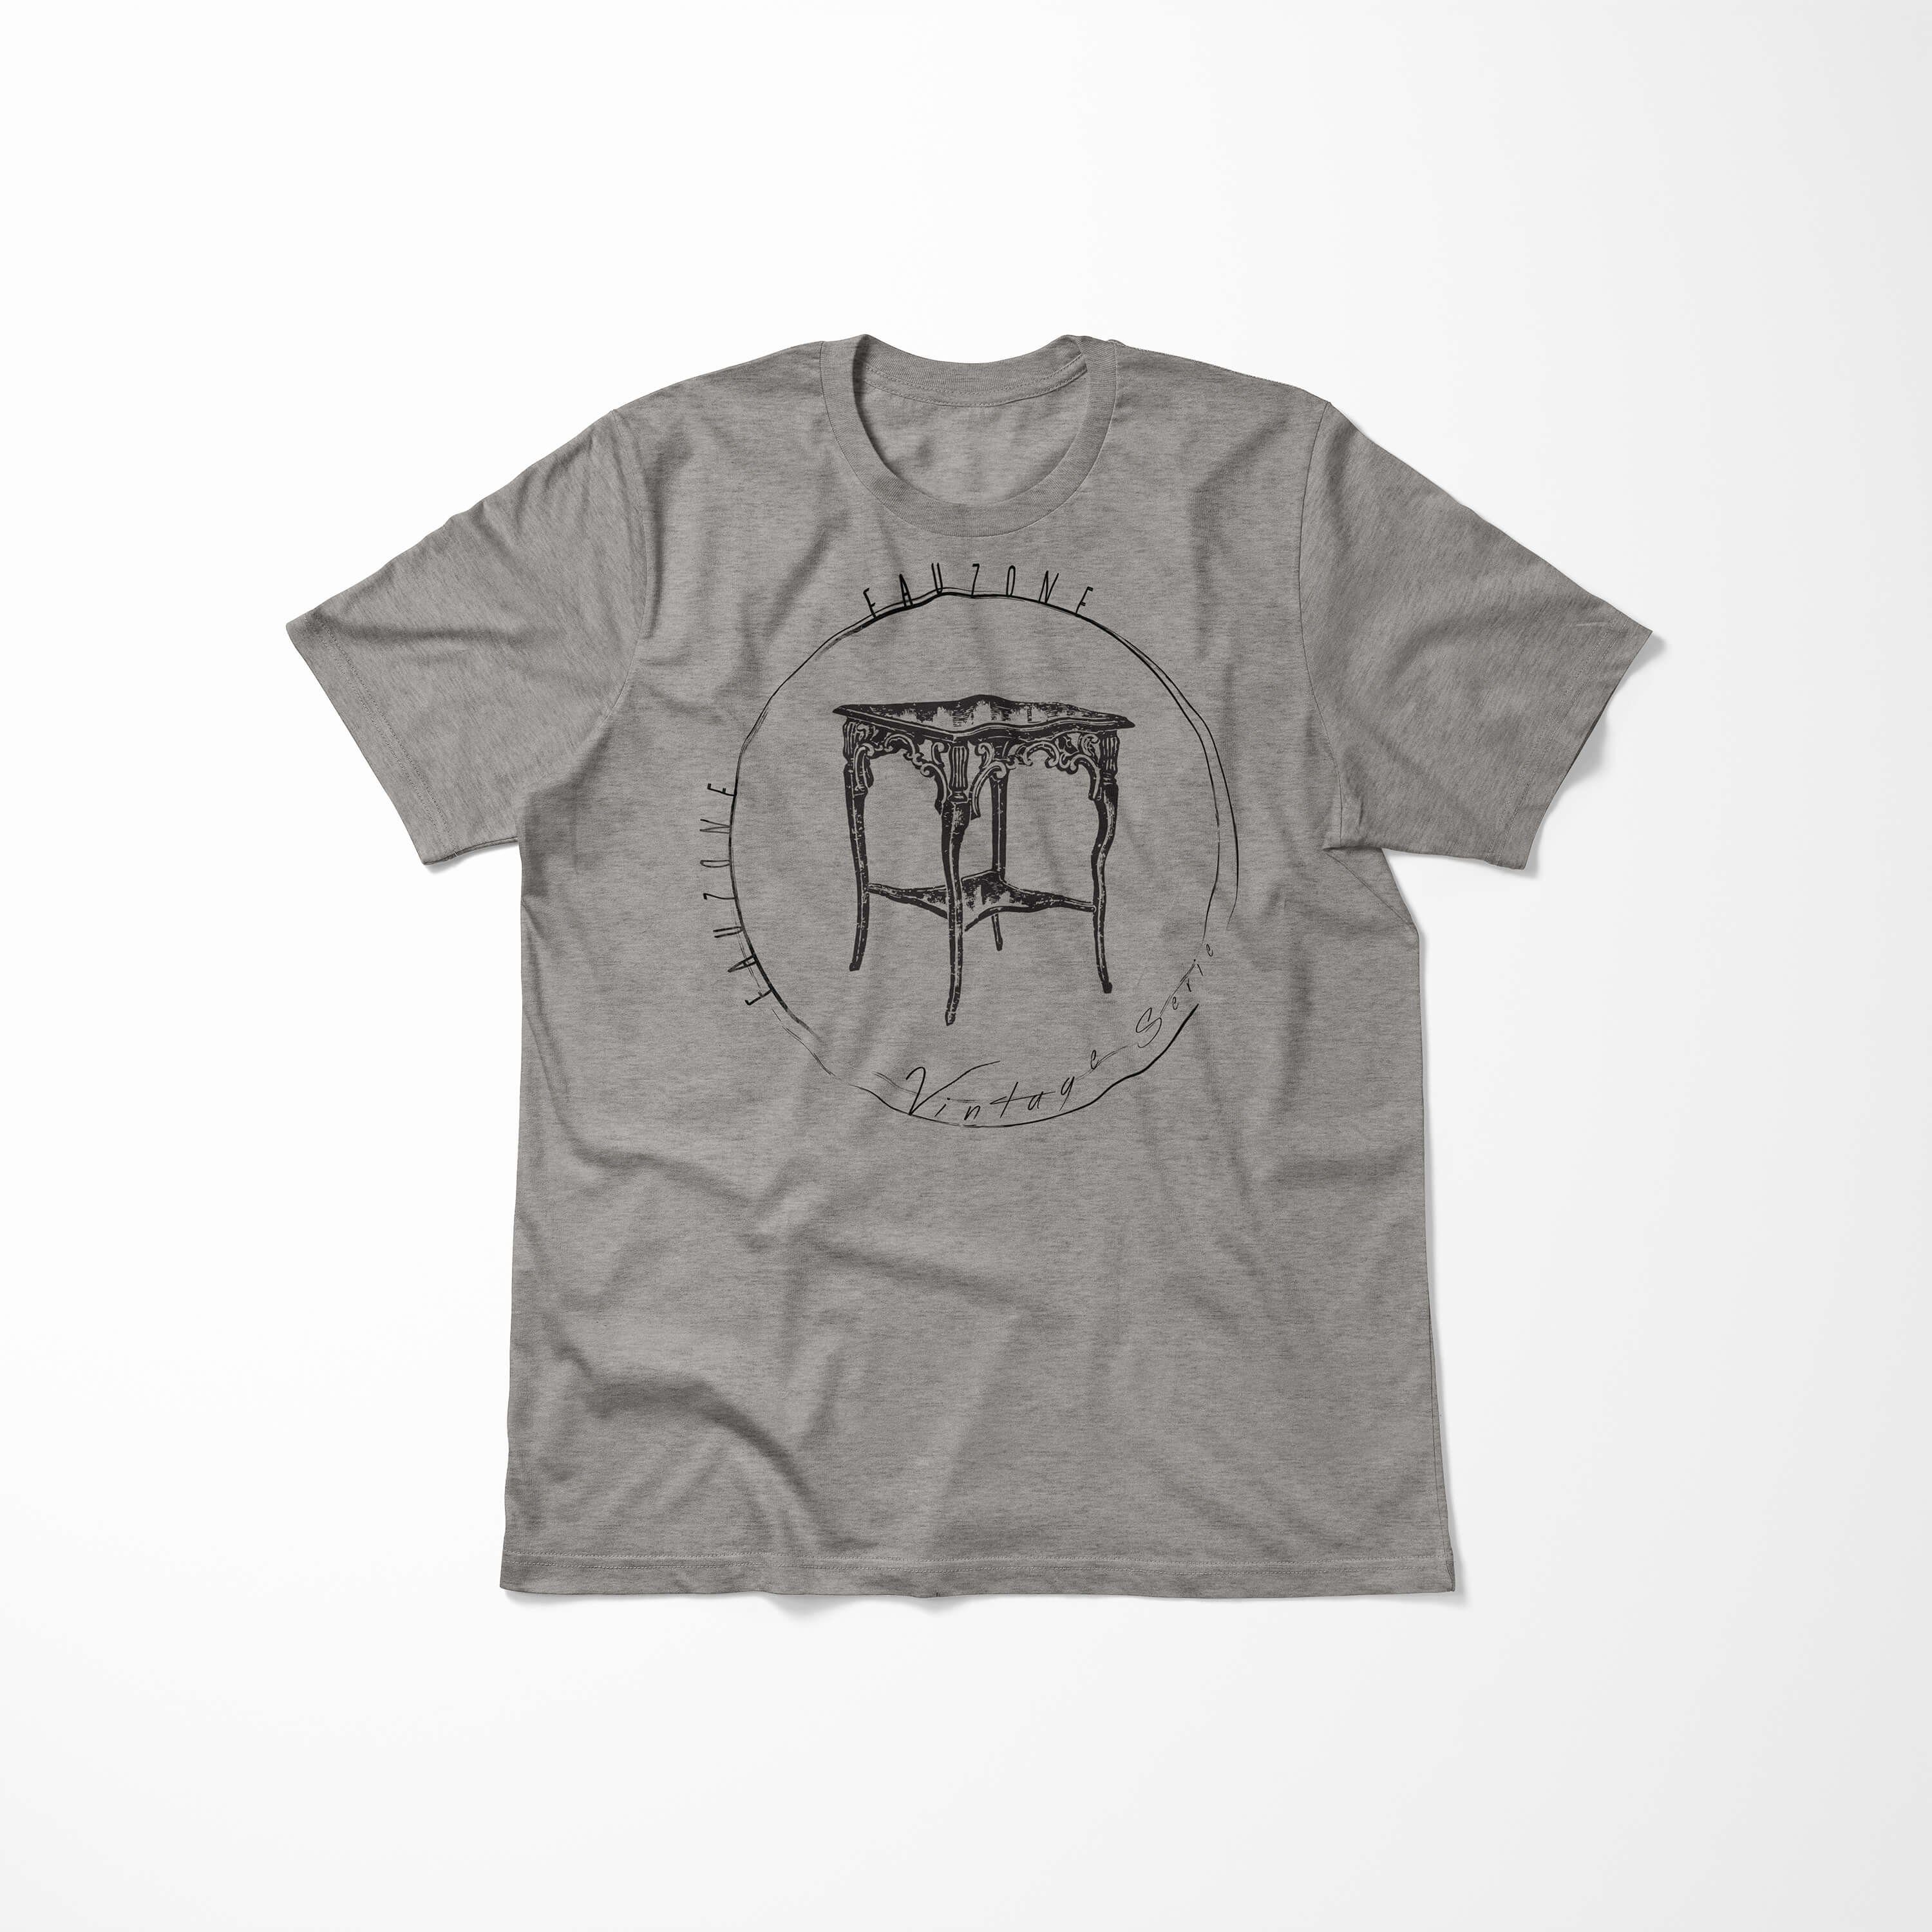 Art T-Shirt Herren T-Shirt Vintage Ash Sinus Beistelltisch